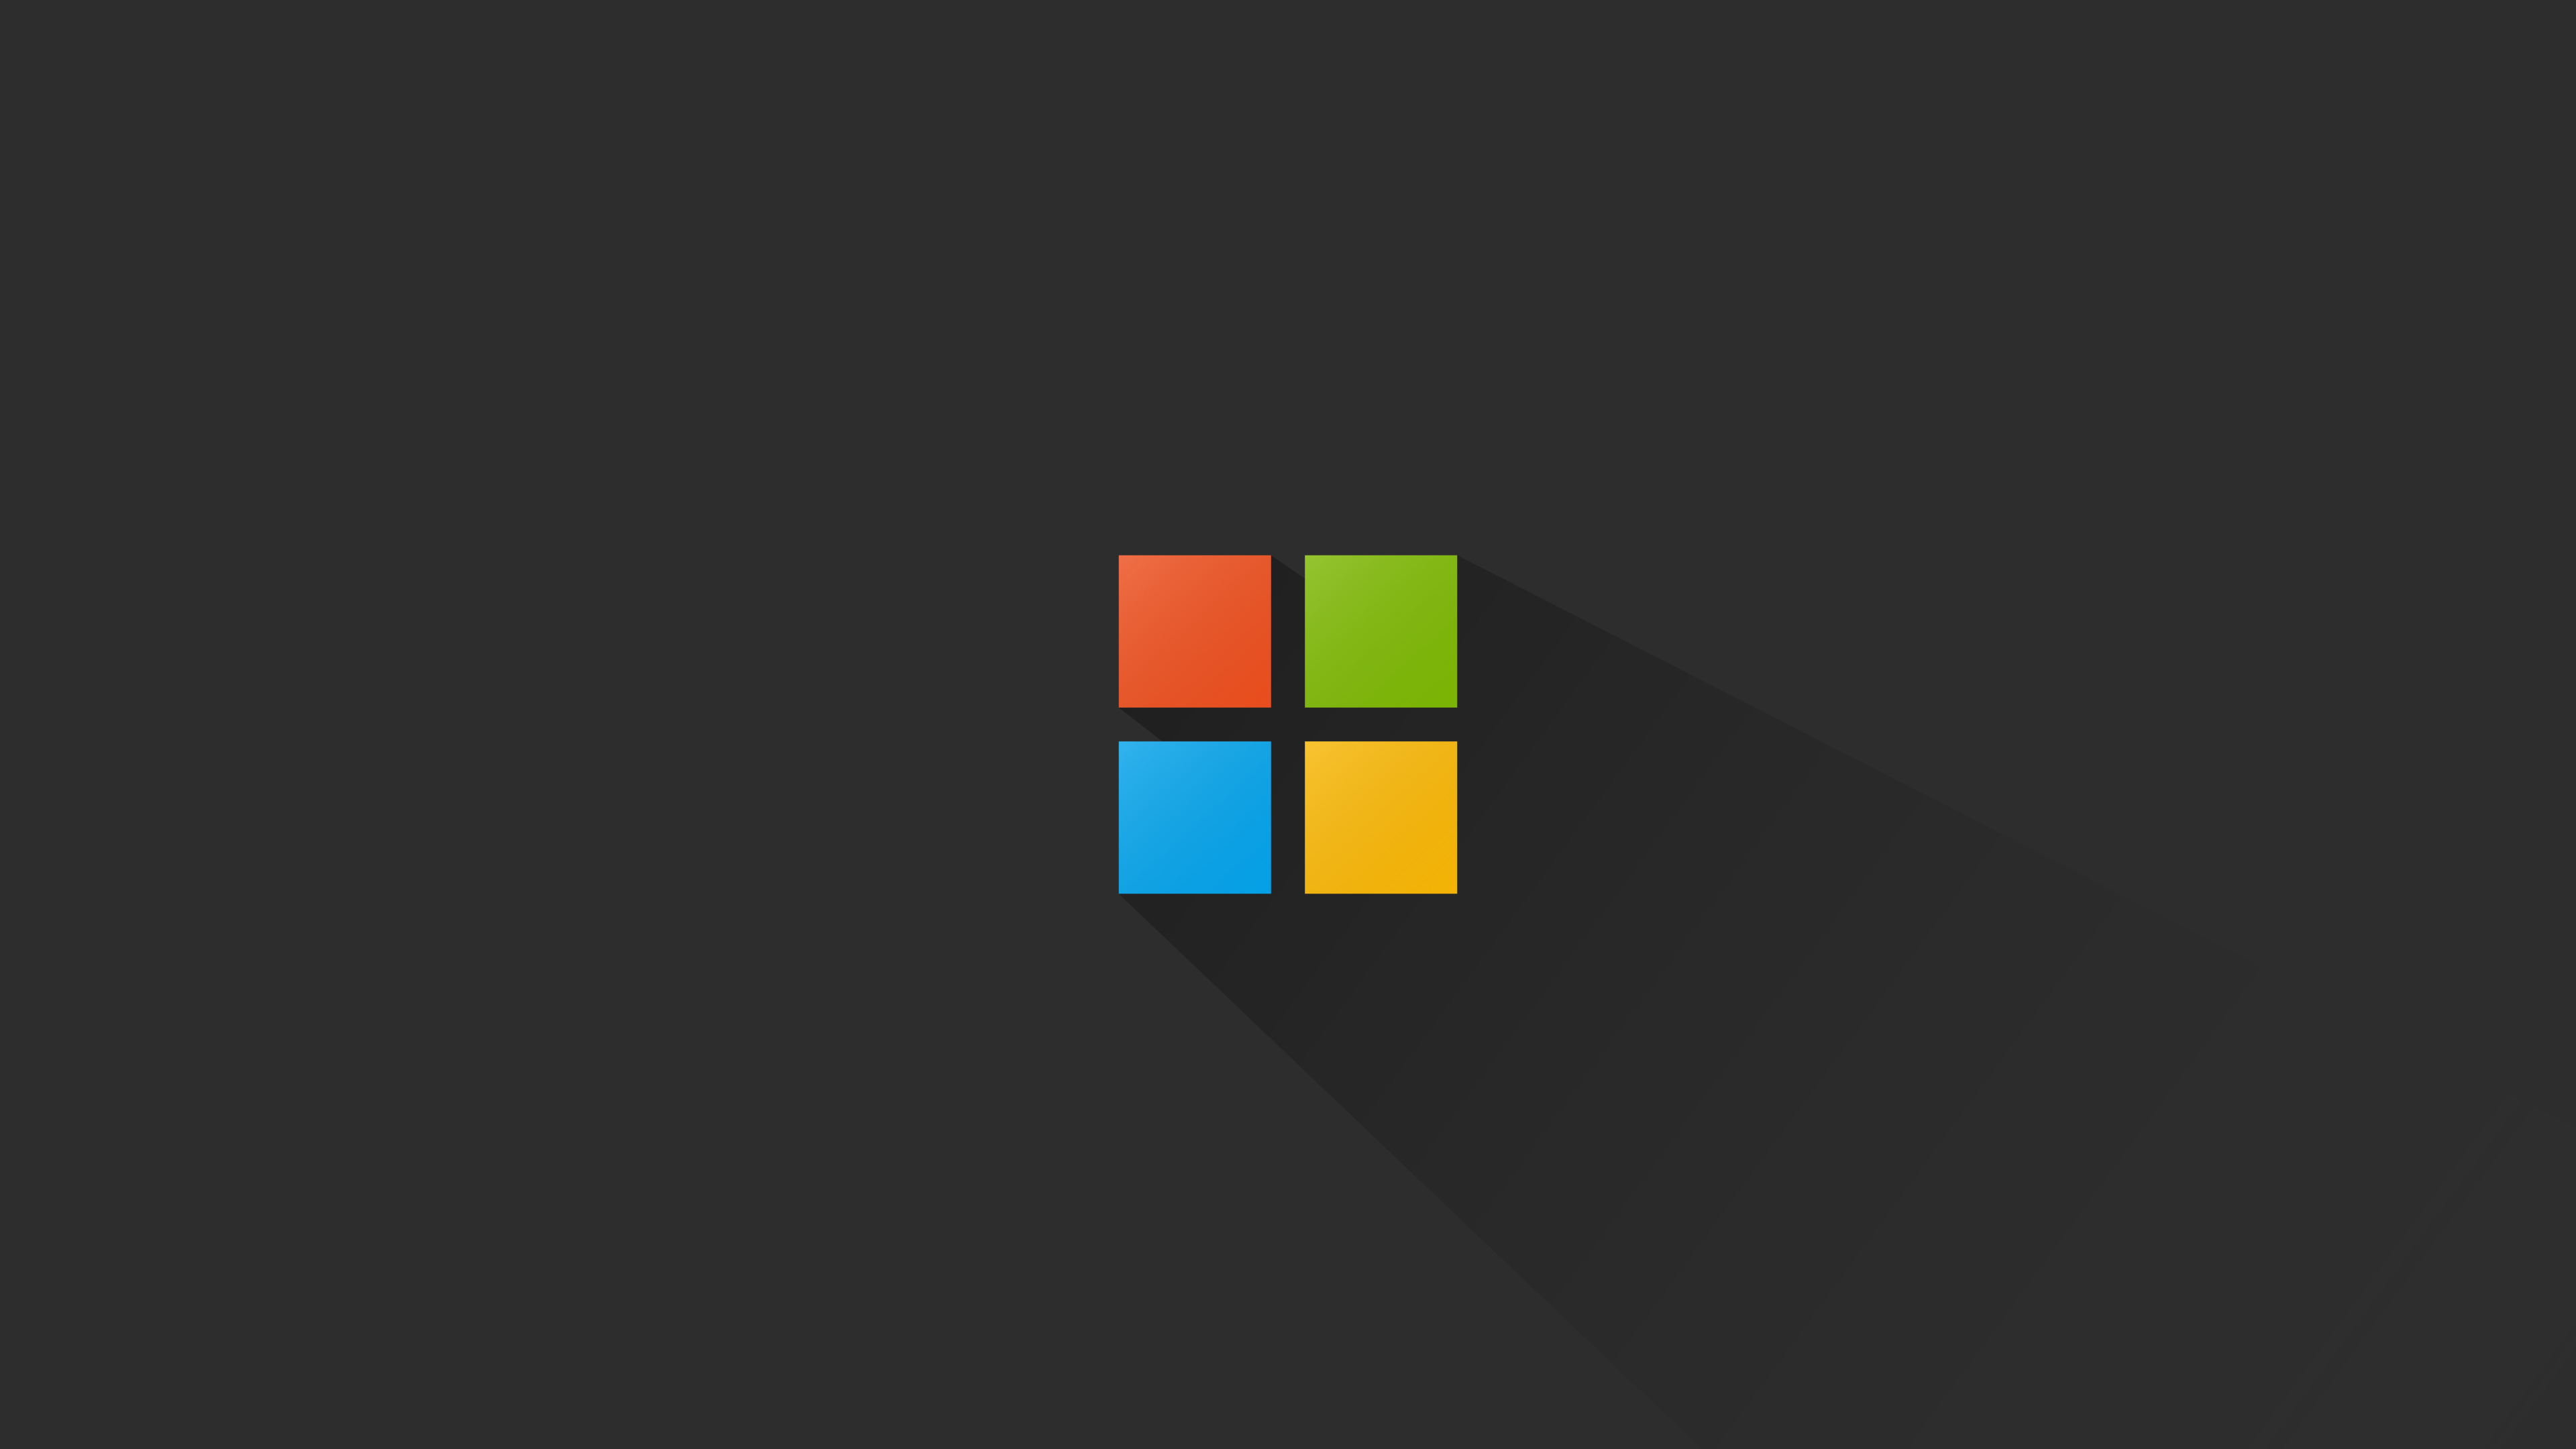 Microsoft Minimal Logo 4k Hd Computer 4k Wallpapers Images